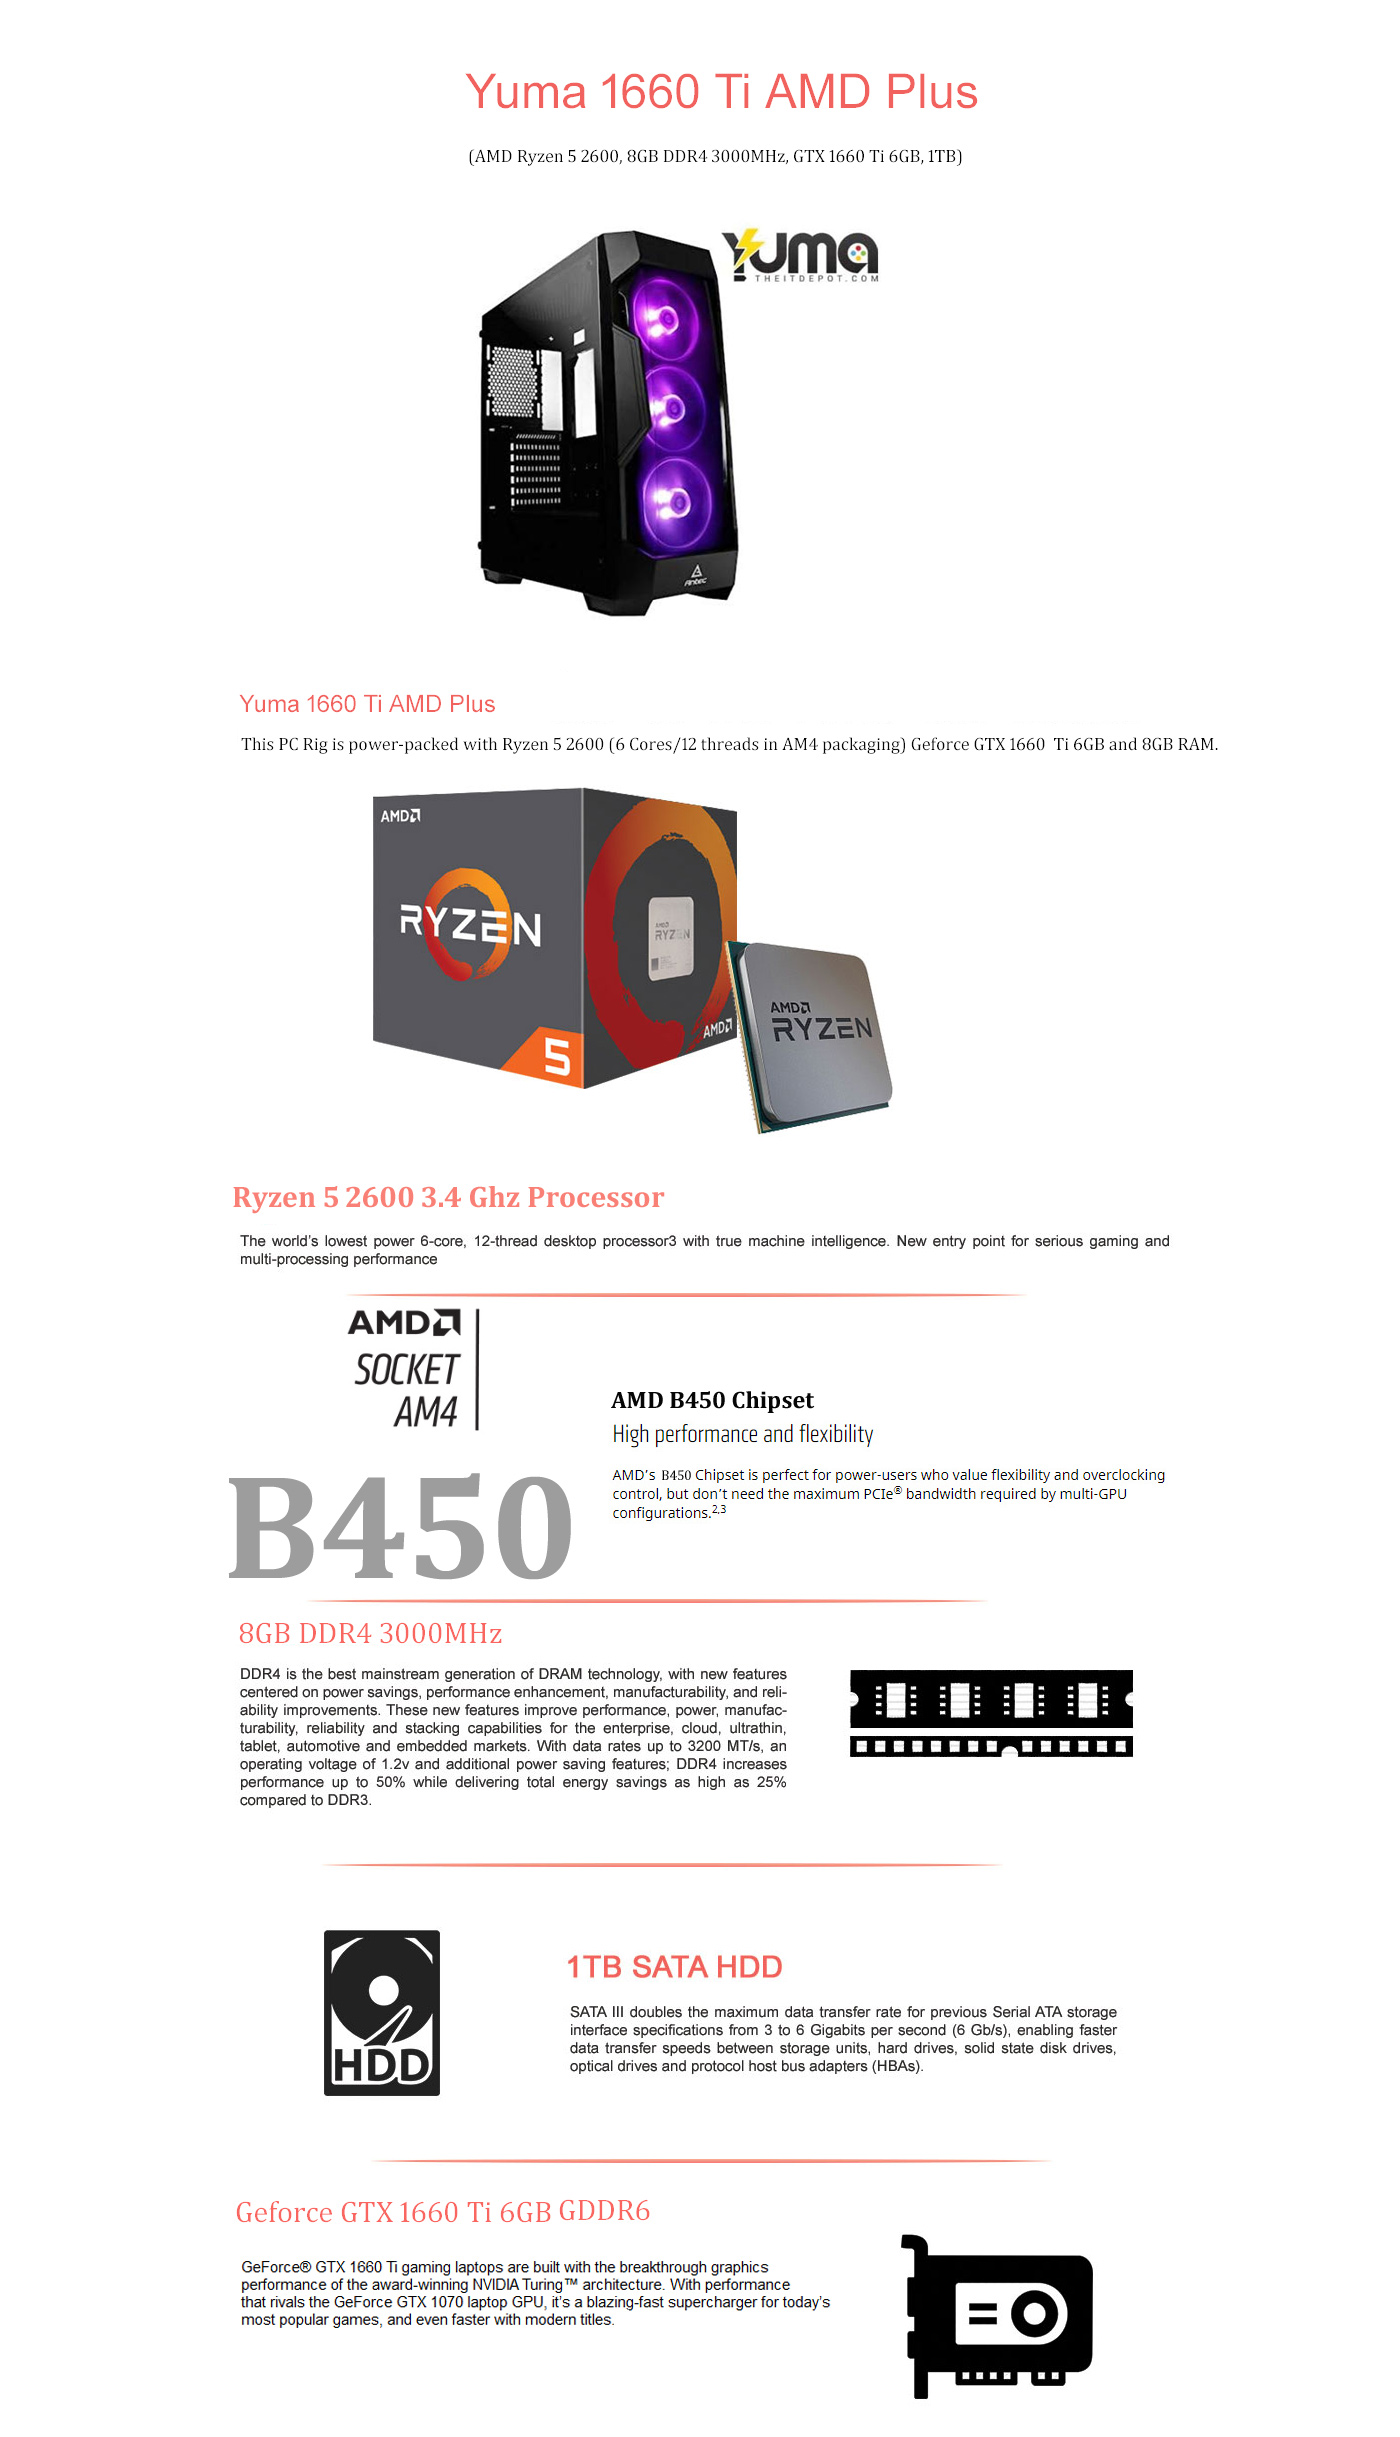  Buy Online Yuma 1660 Ti AMD Plus (AMD Ryzen 5 2600, 8GB, 1TB, GTX 1660 Ti 6GB)